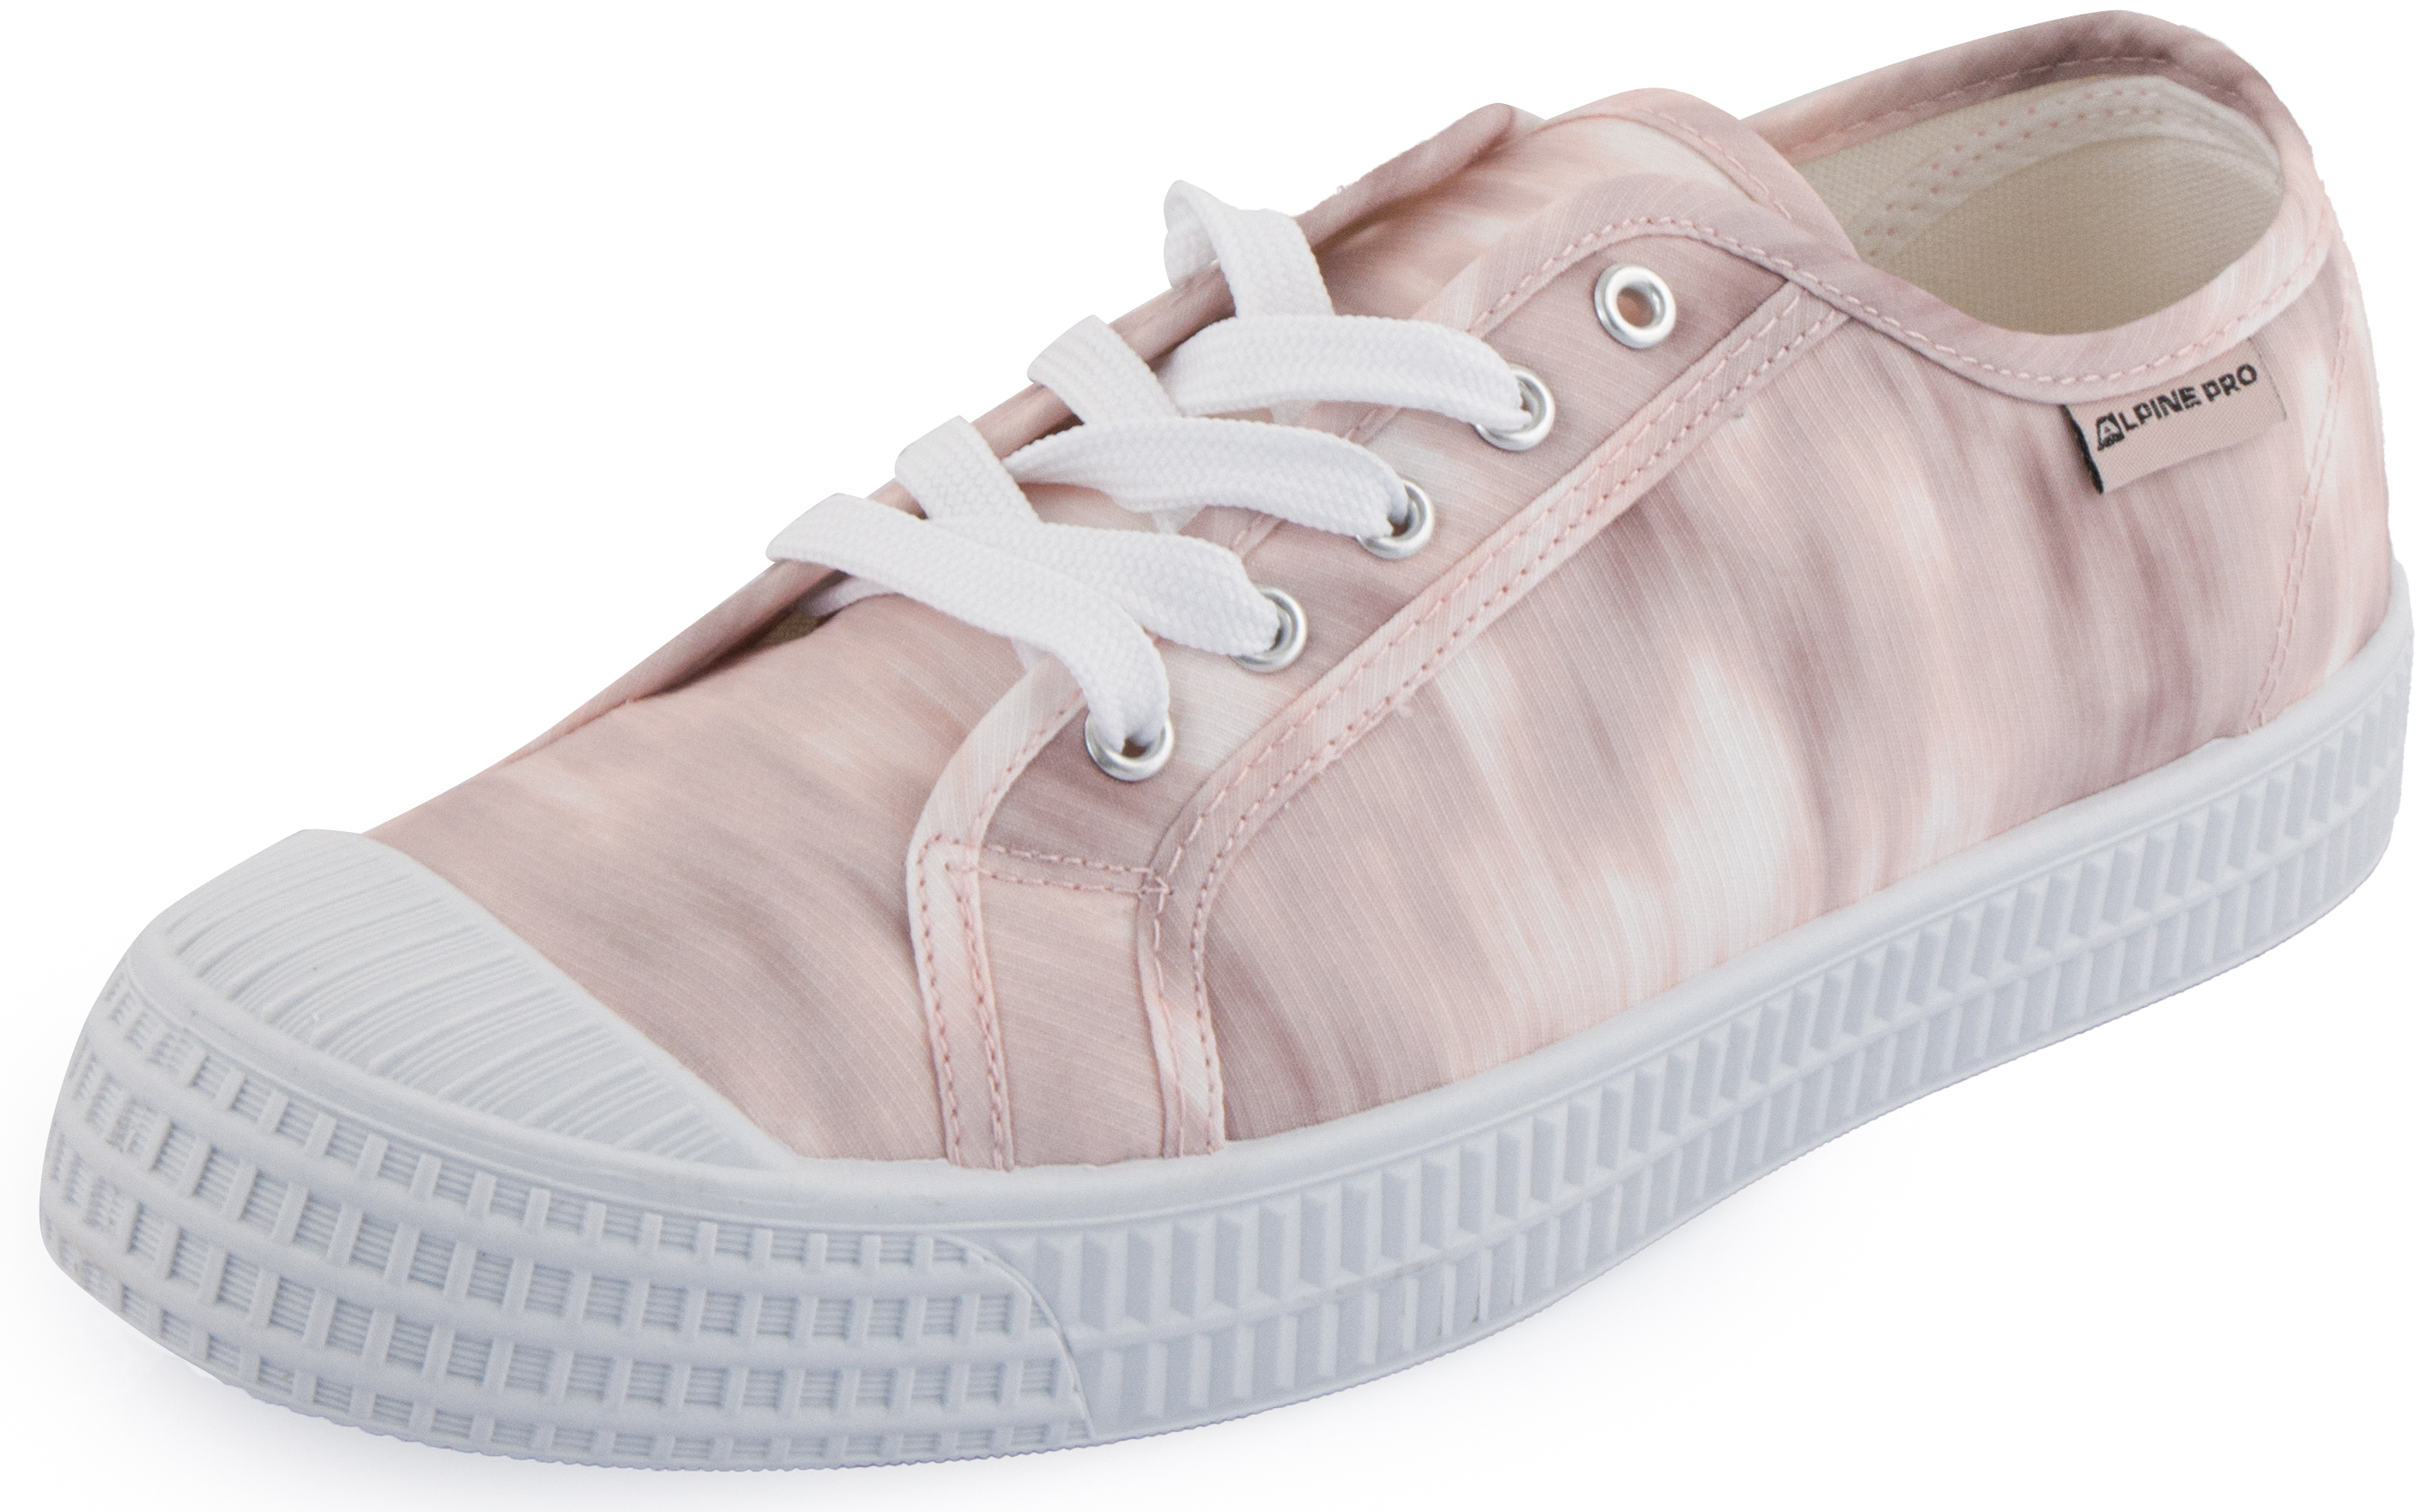 Women's urban shoes ALPINE PRO ZARADA whisper pink